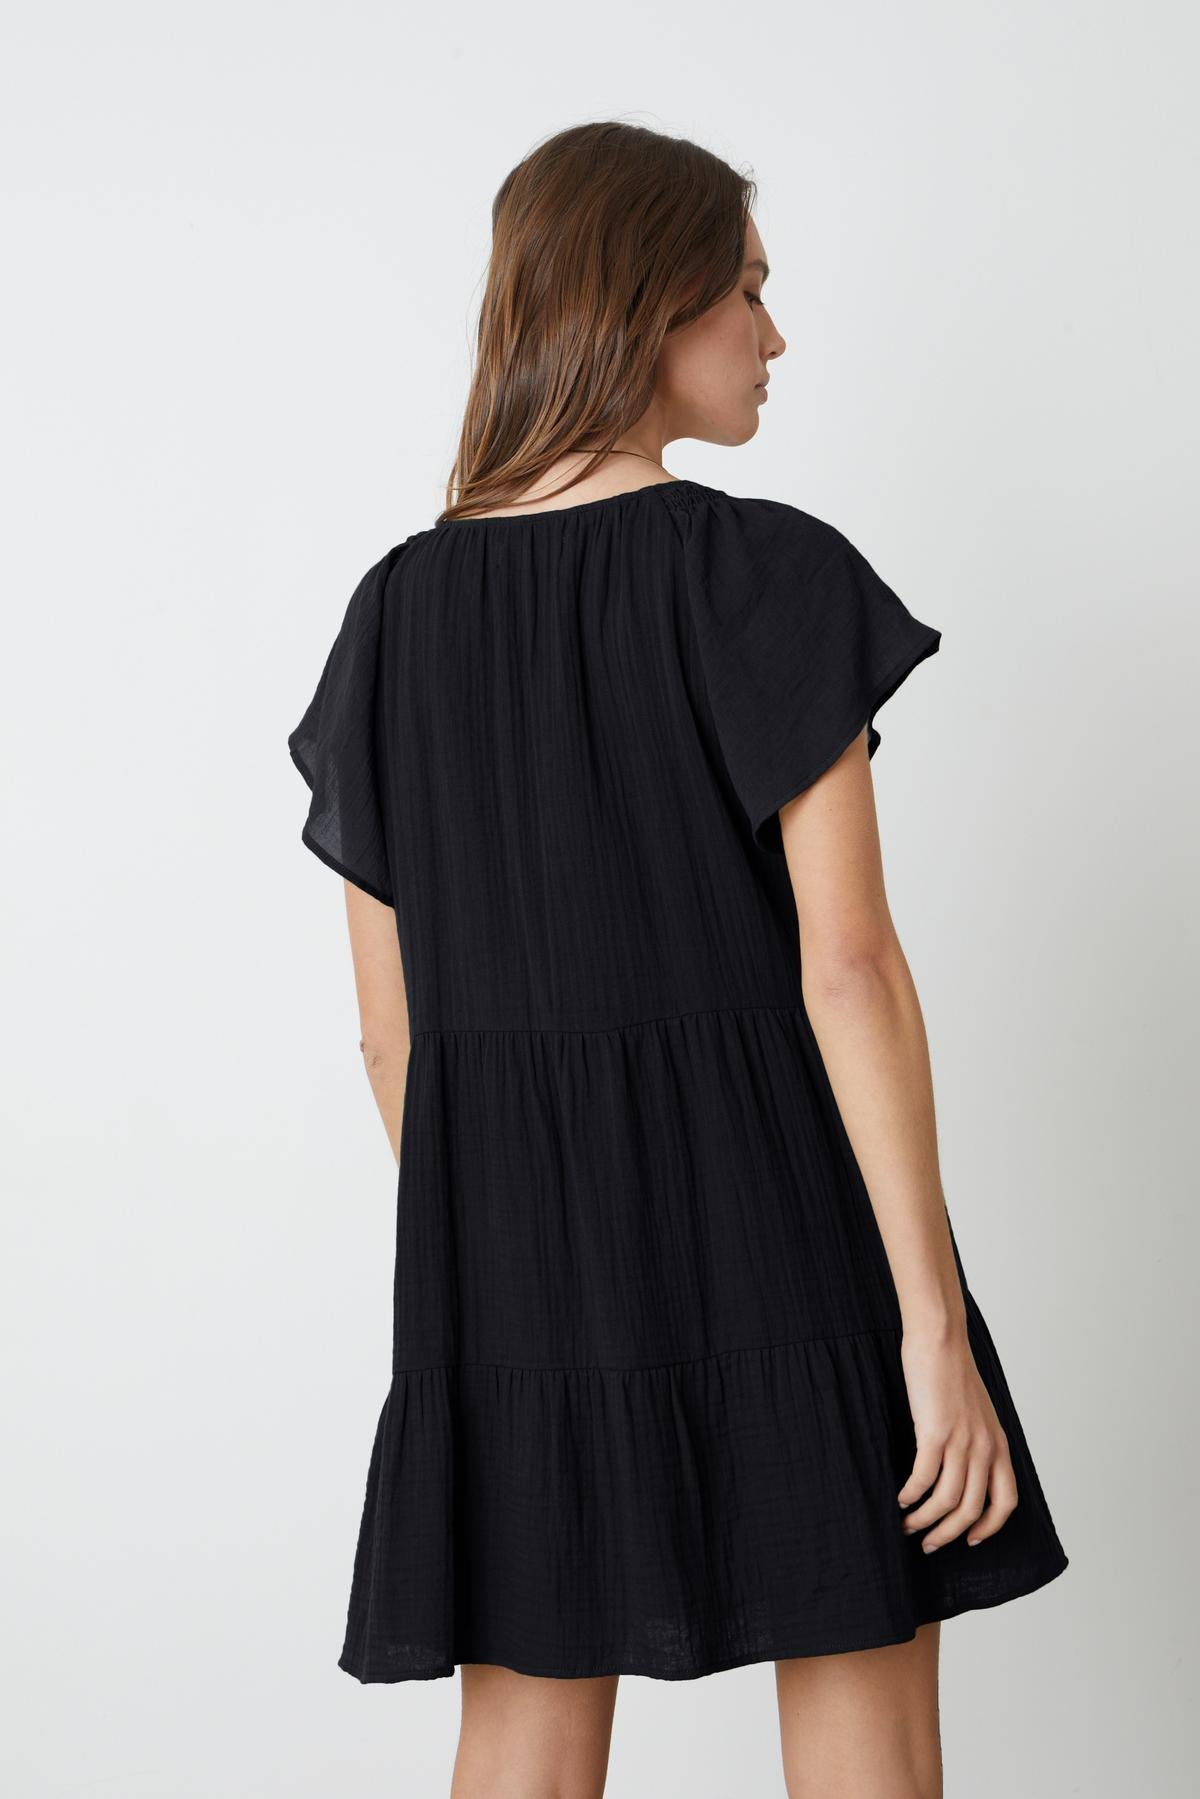 Eleanor Tiered Dress in black cotton gauze back-26262132687041